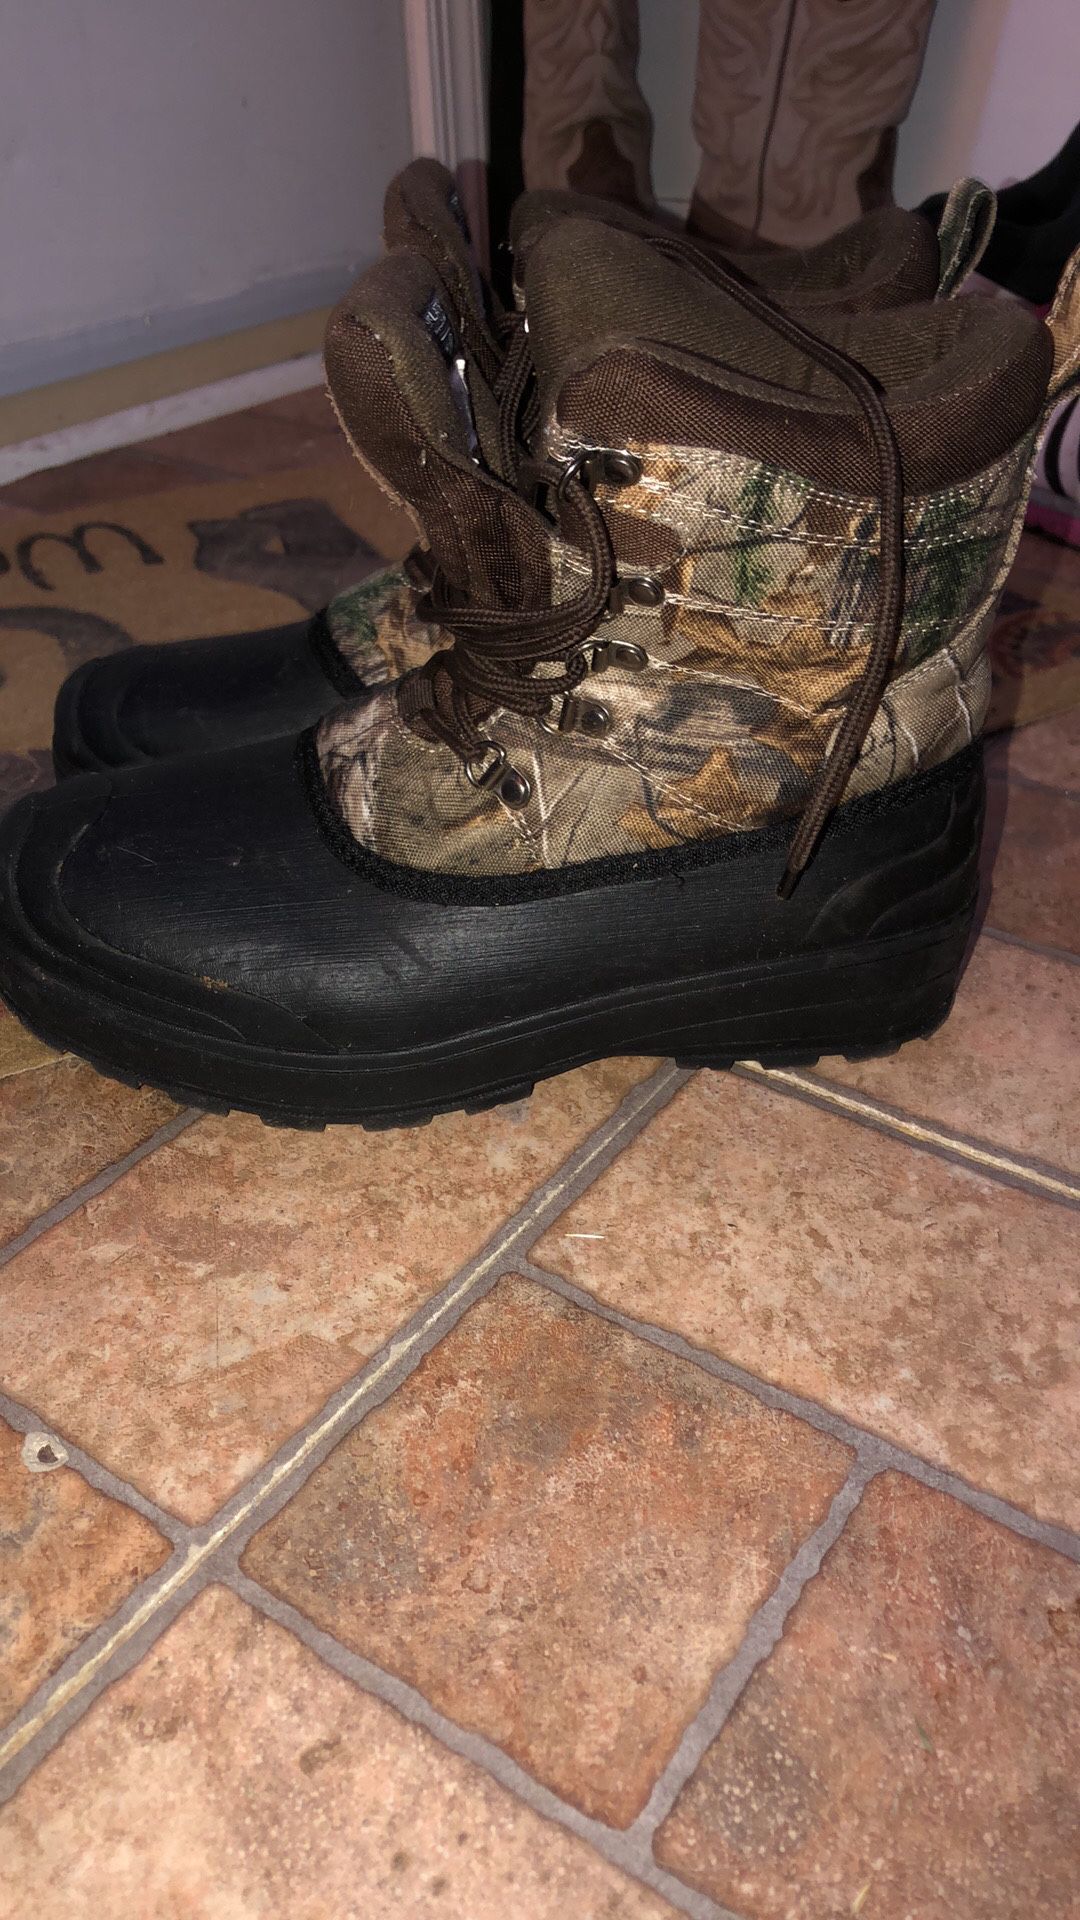 Ozark trail boots size 7